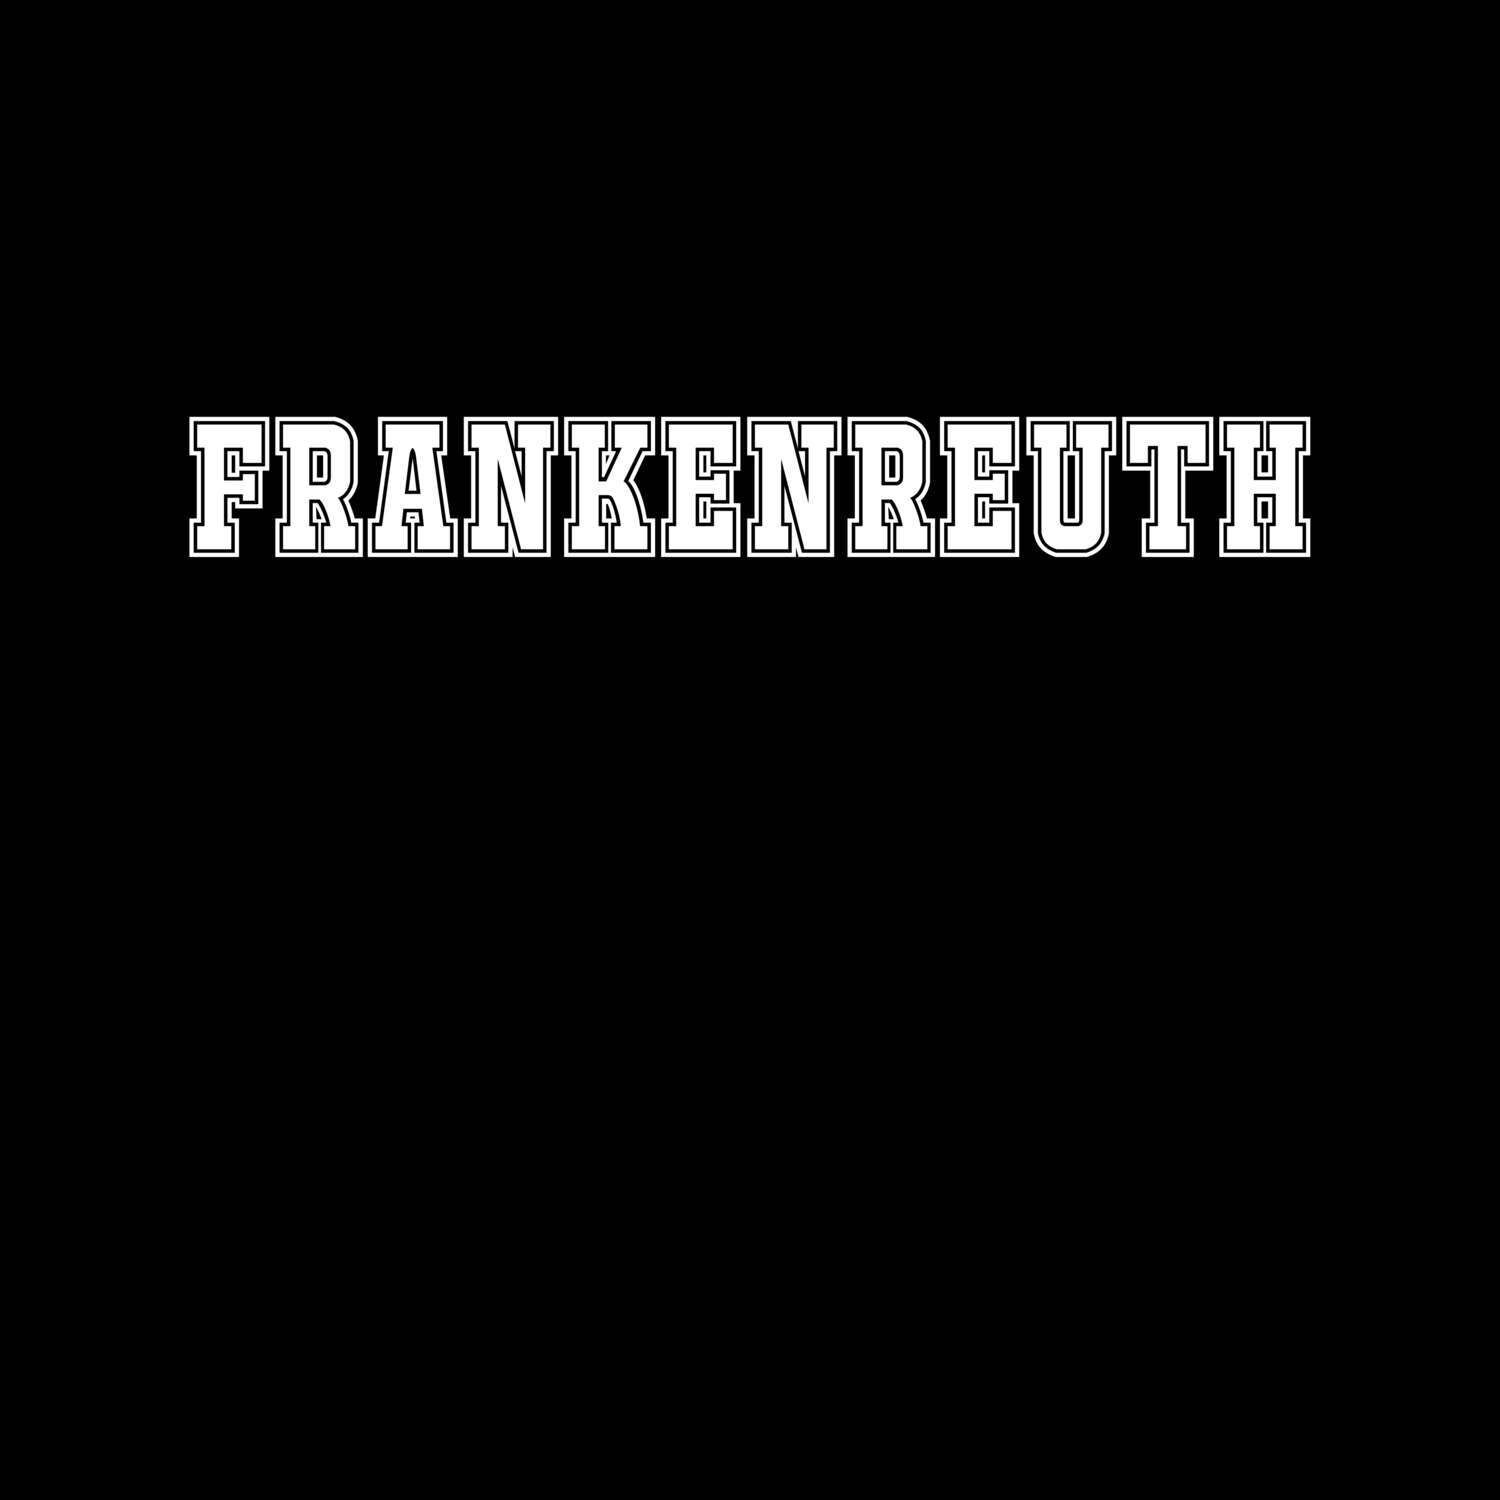 Frankenreuth T-Shirt »Classic«